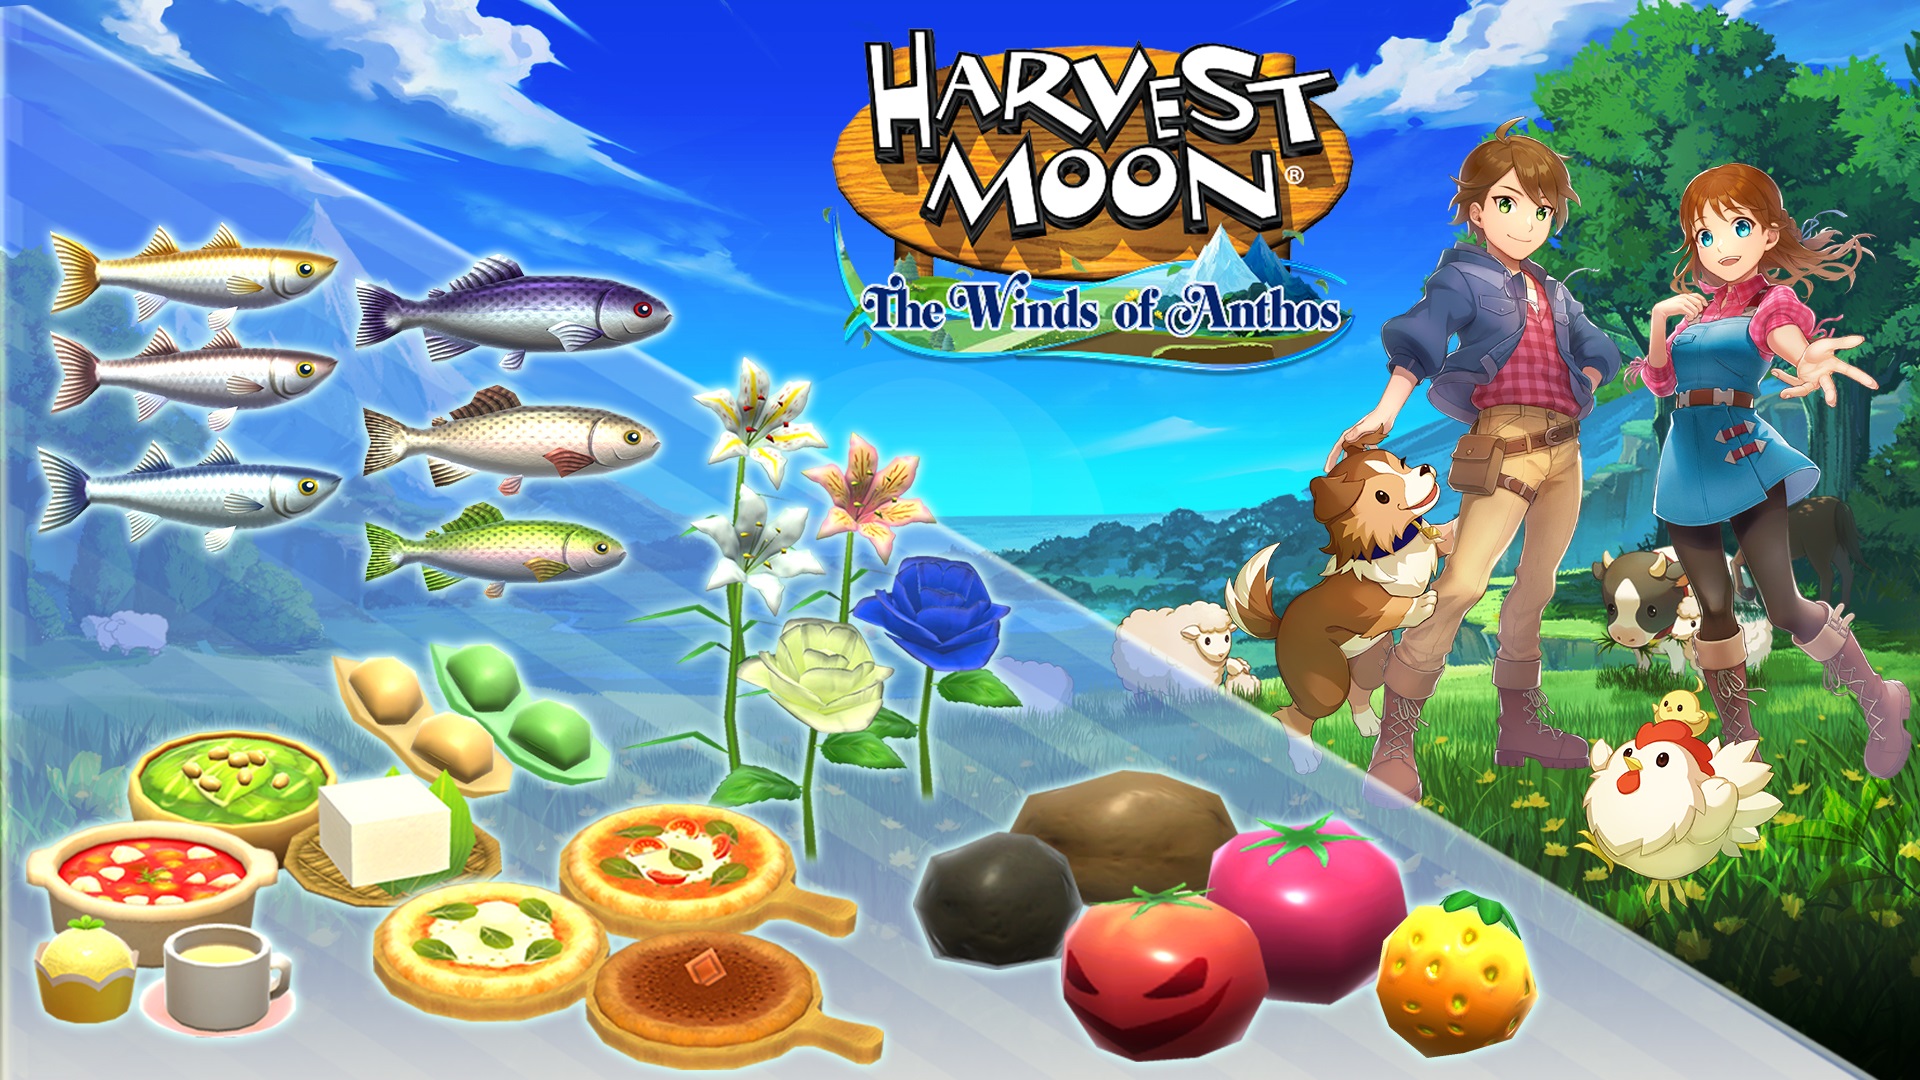 Harvest Moon: The Winds of Anthos (Multi) recebe seu primeiro